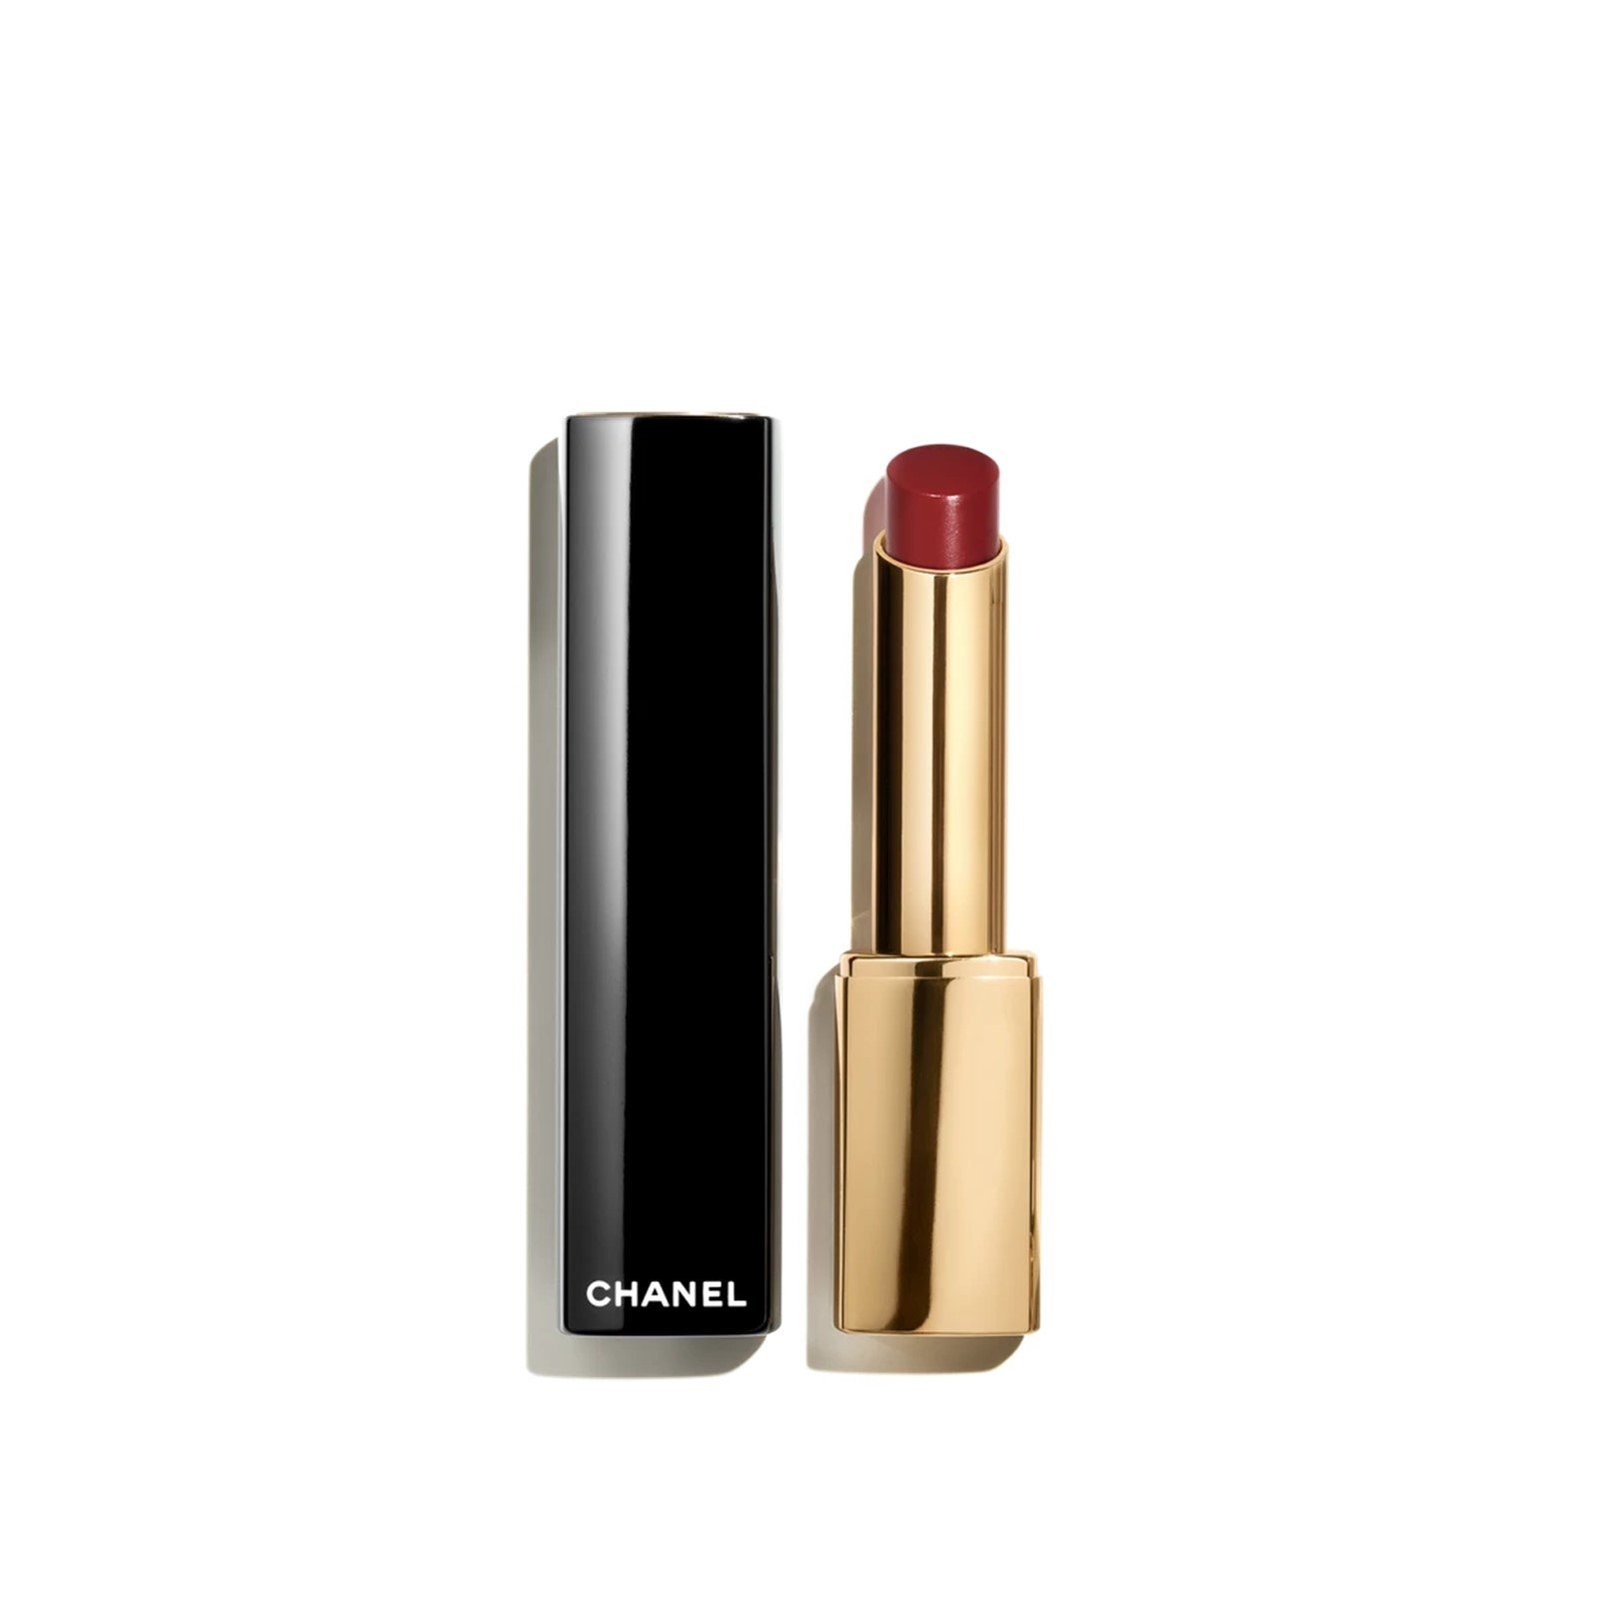 CHANEL Rouge Allure L'Extrait High-Intensity Lip Colour 868 Rouge Excessif 2g (0.07 oz)